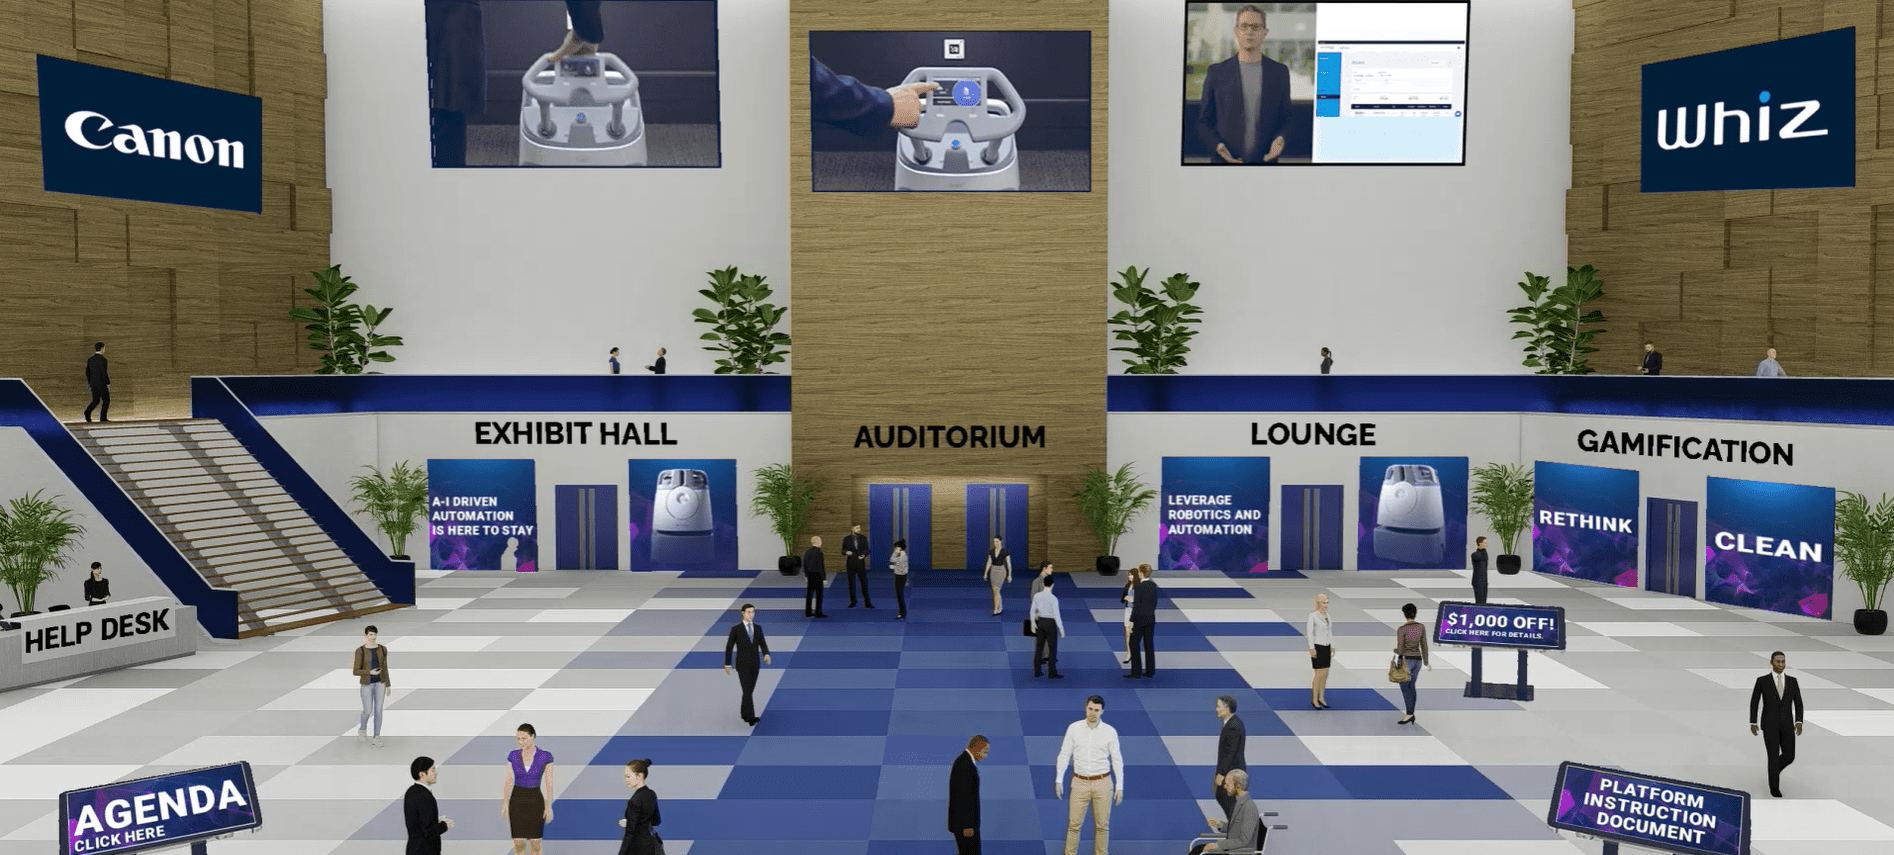 3D lobby of Canon Robotics Whiz Expo